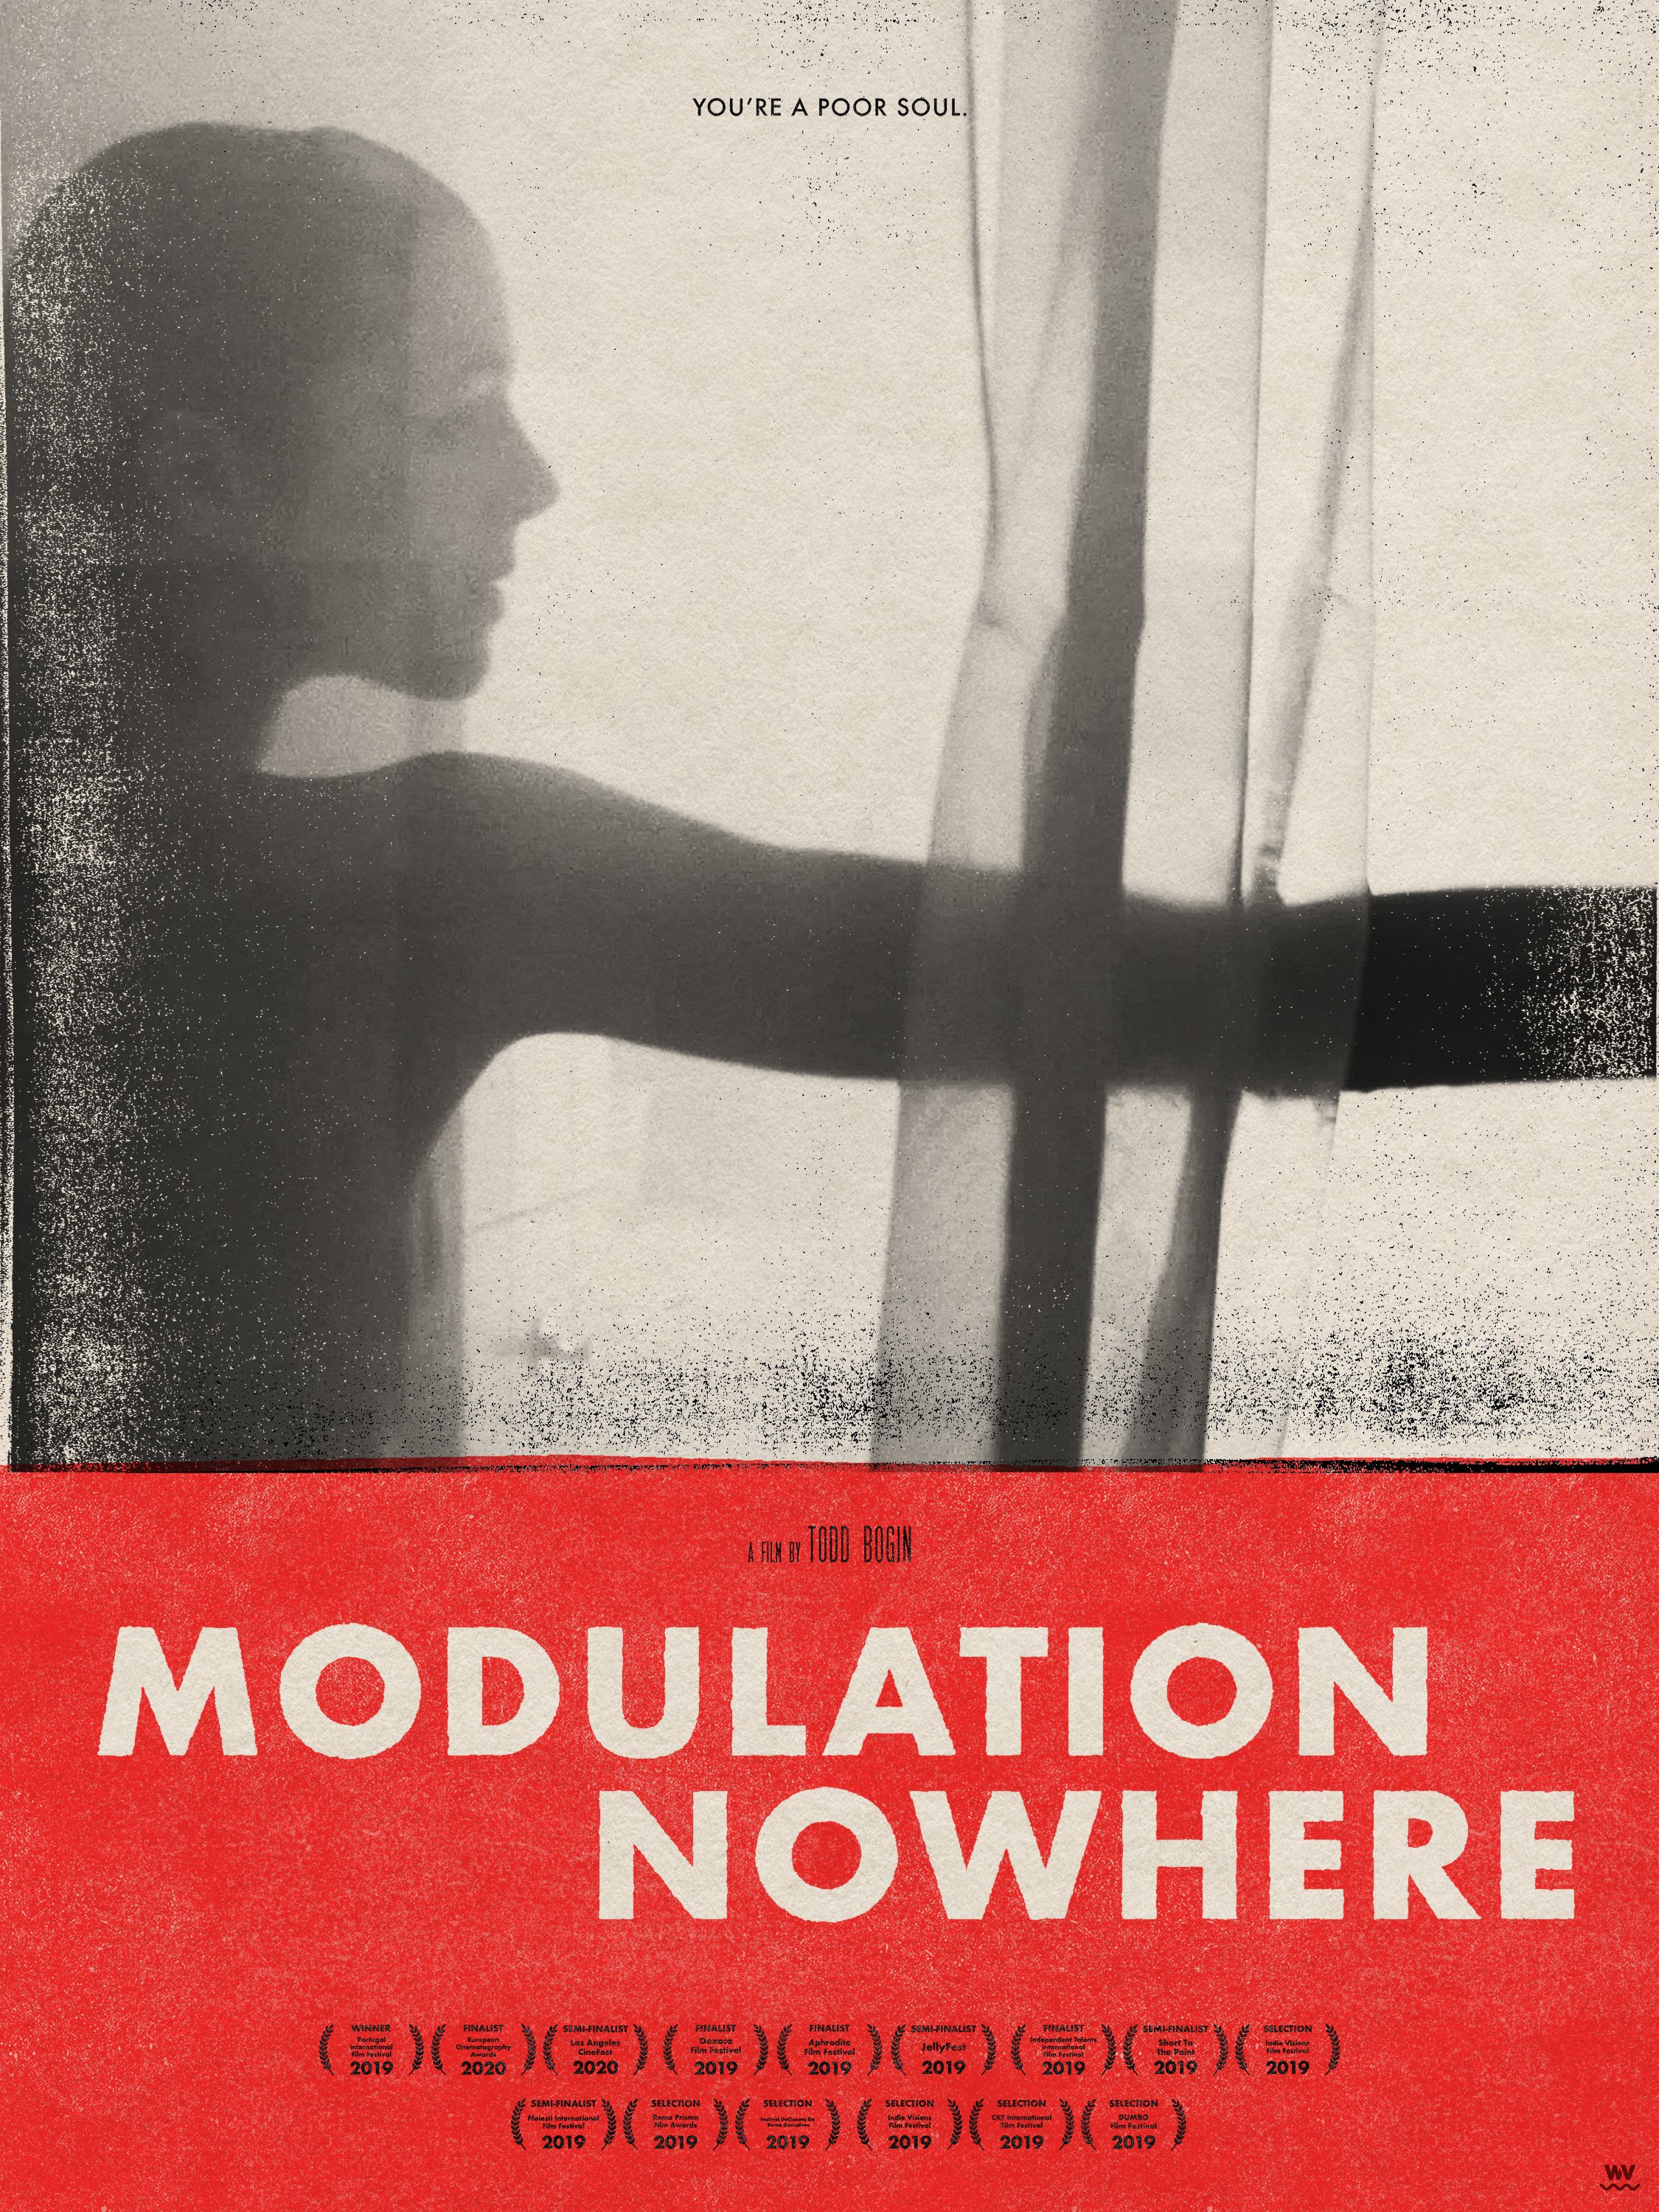 modulation nowhere_poster_red.jpg